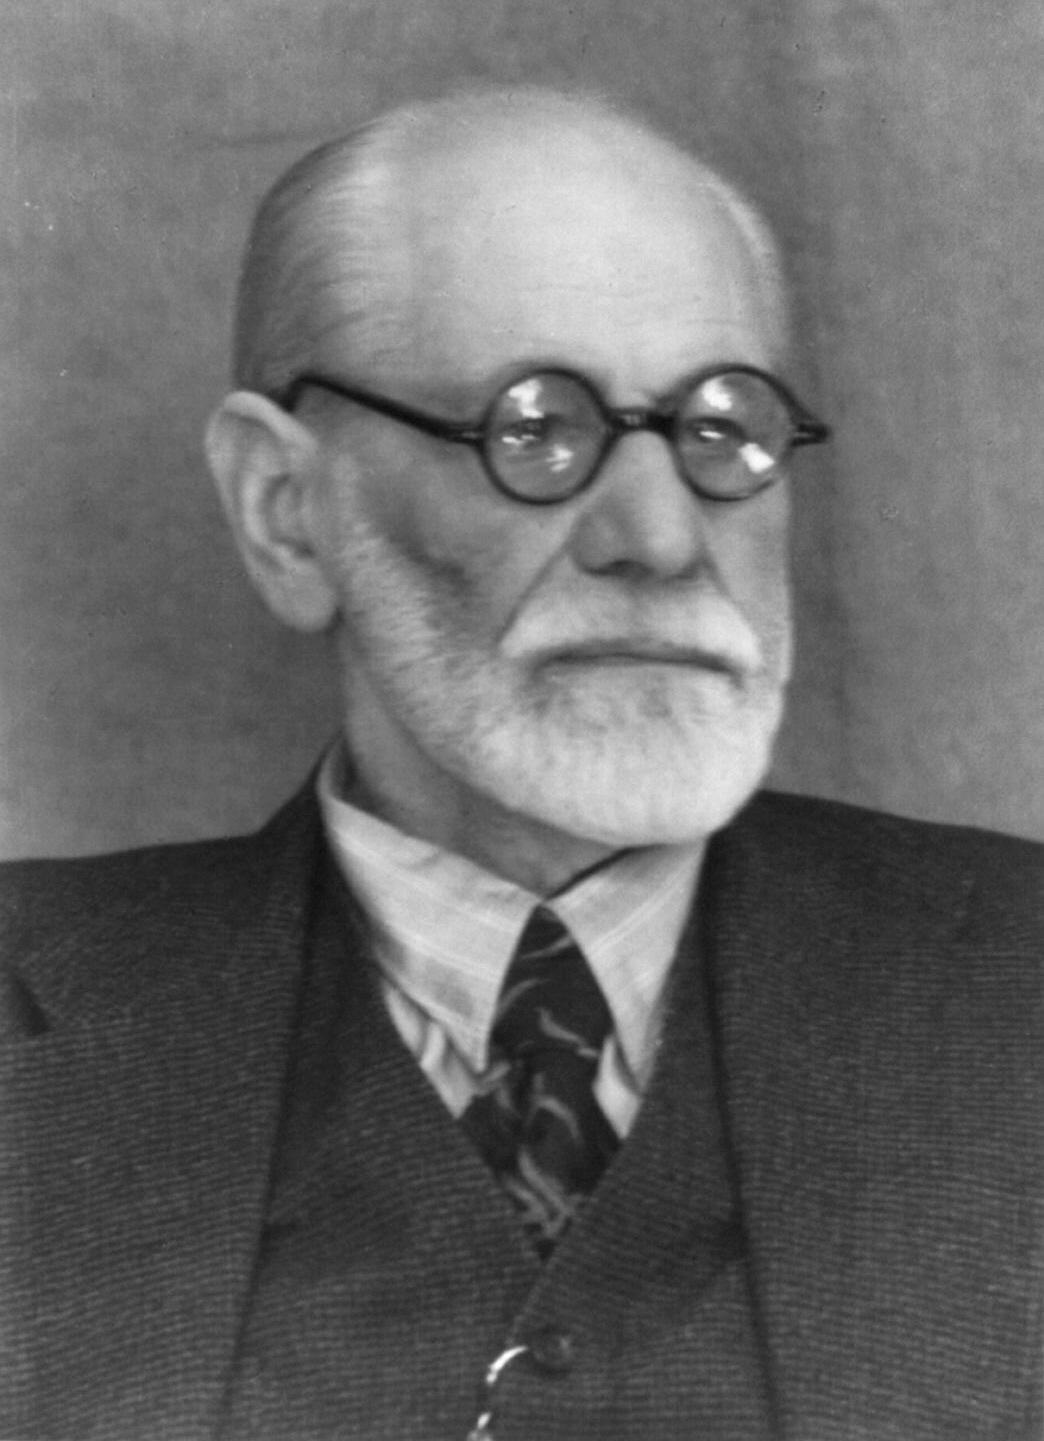 http://www.wikidoc.org/images/6/6f/Sigmund_Freud-loc.jpg